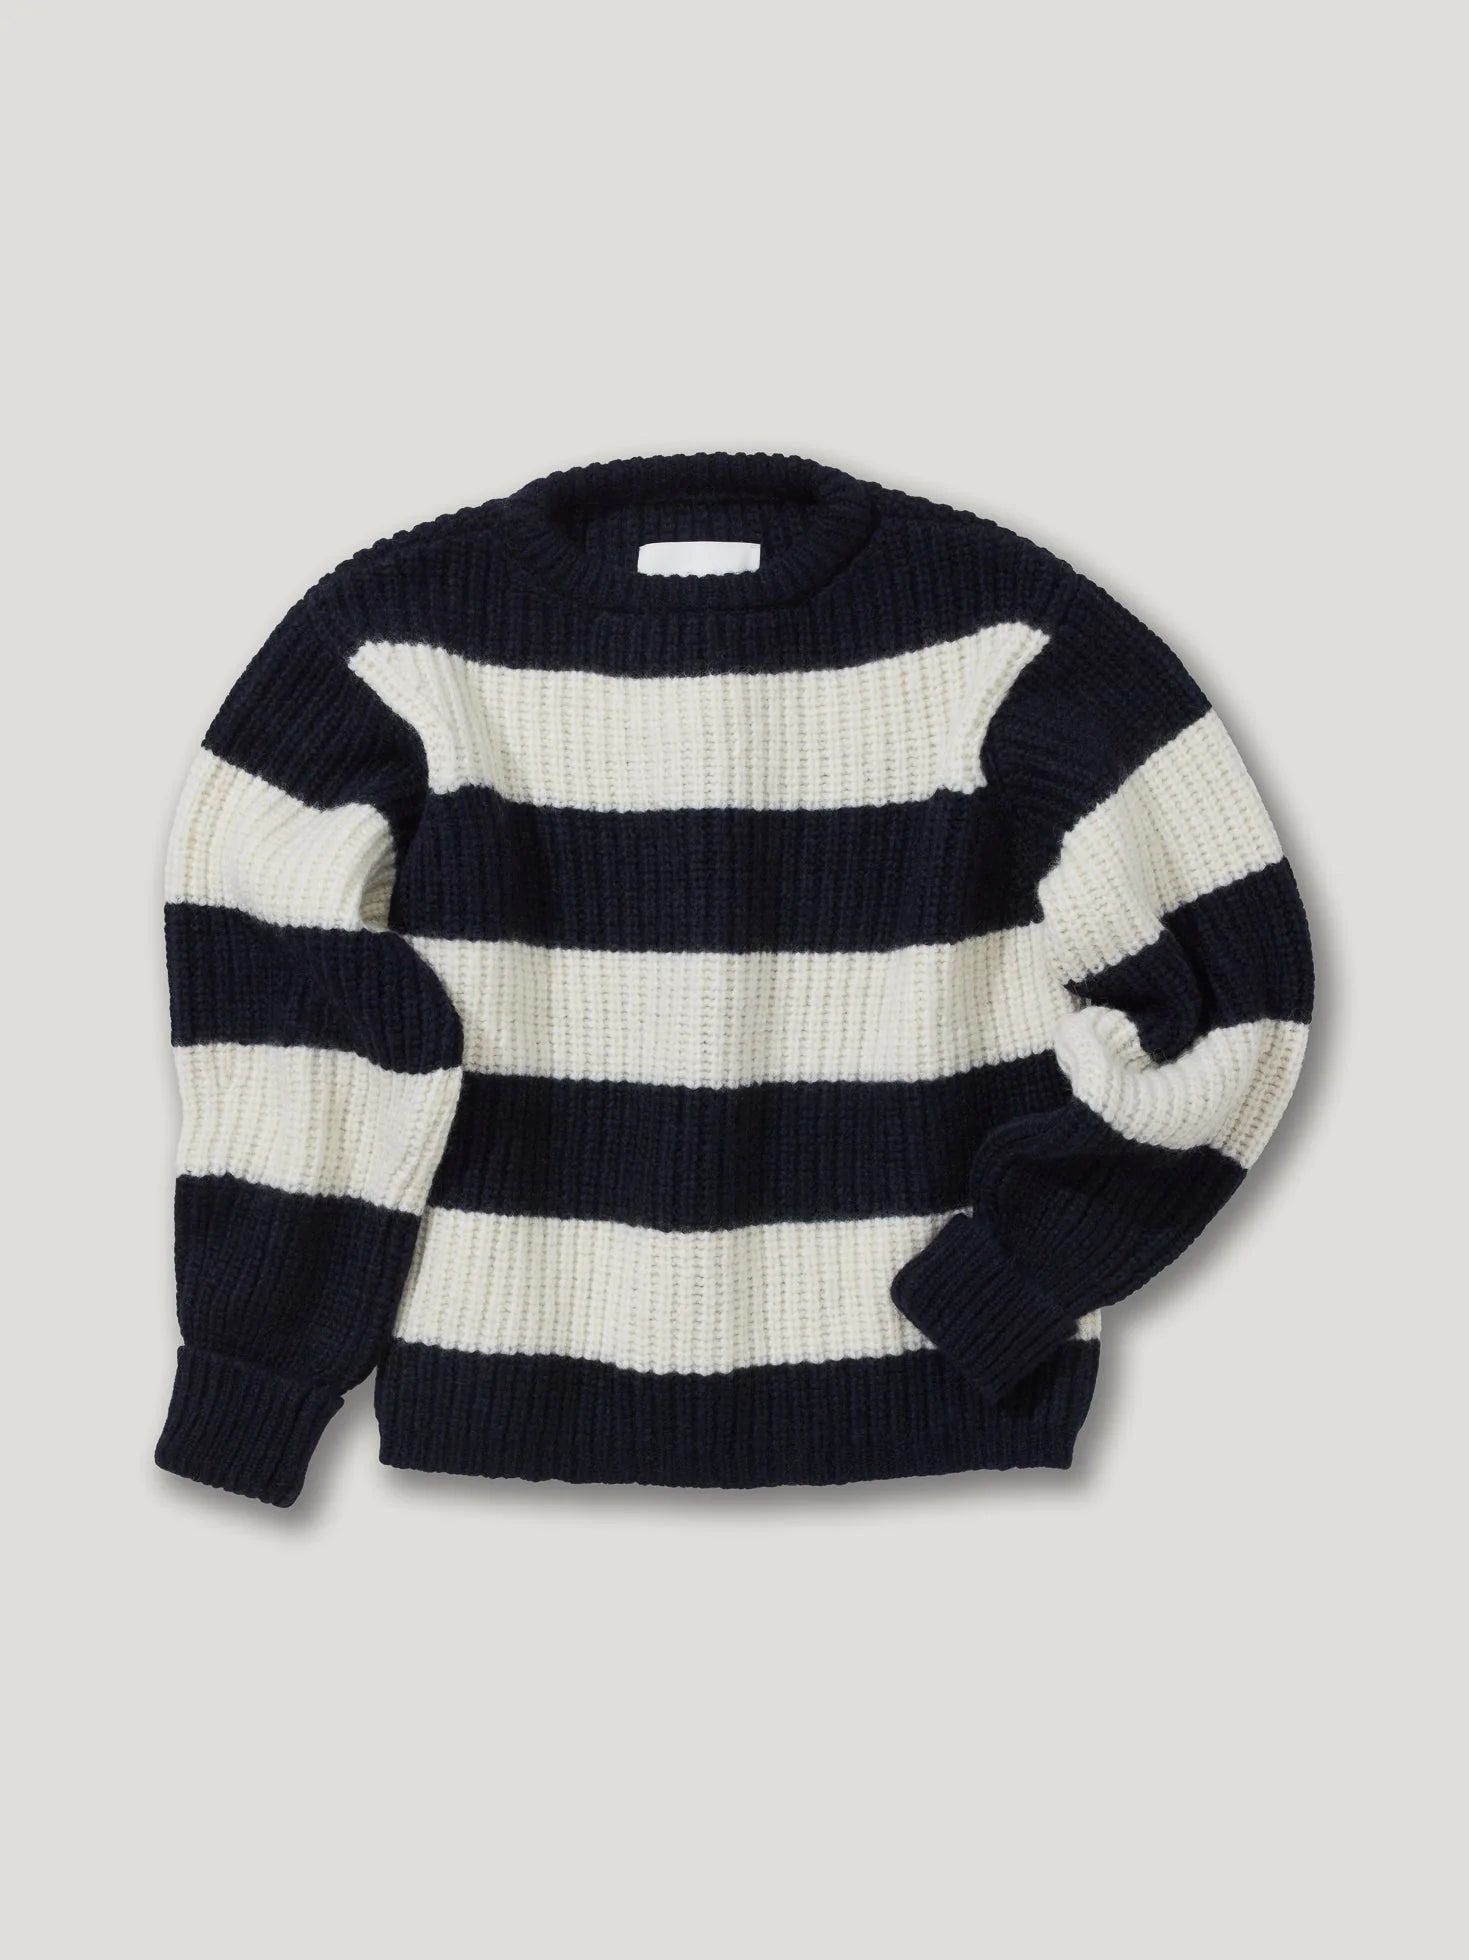 Ida knit sweater blue and white stripes